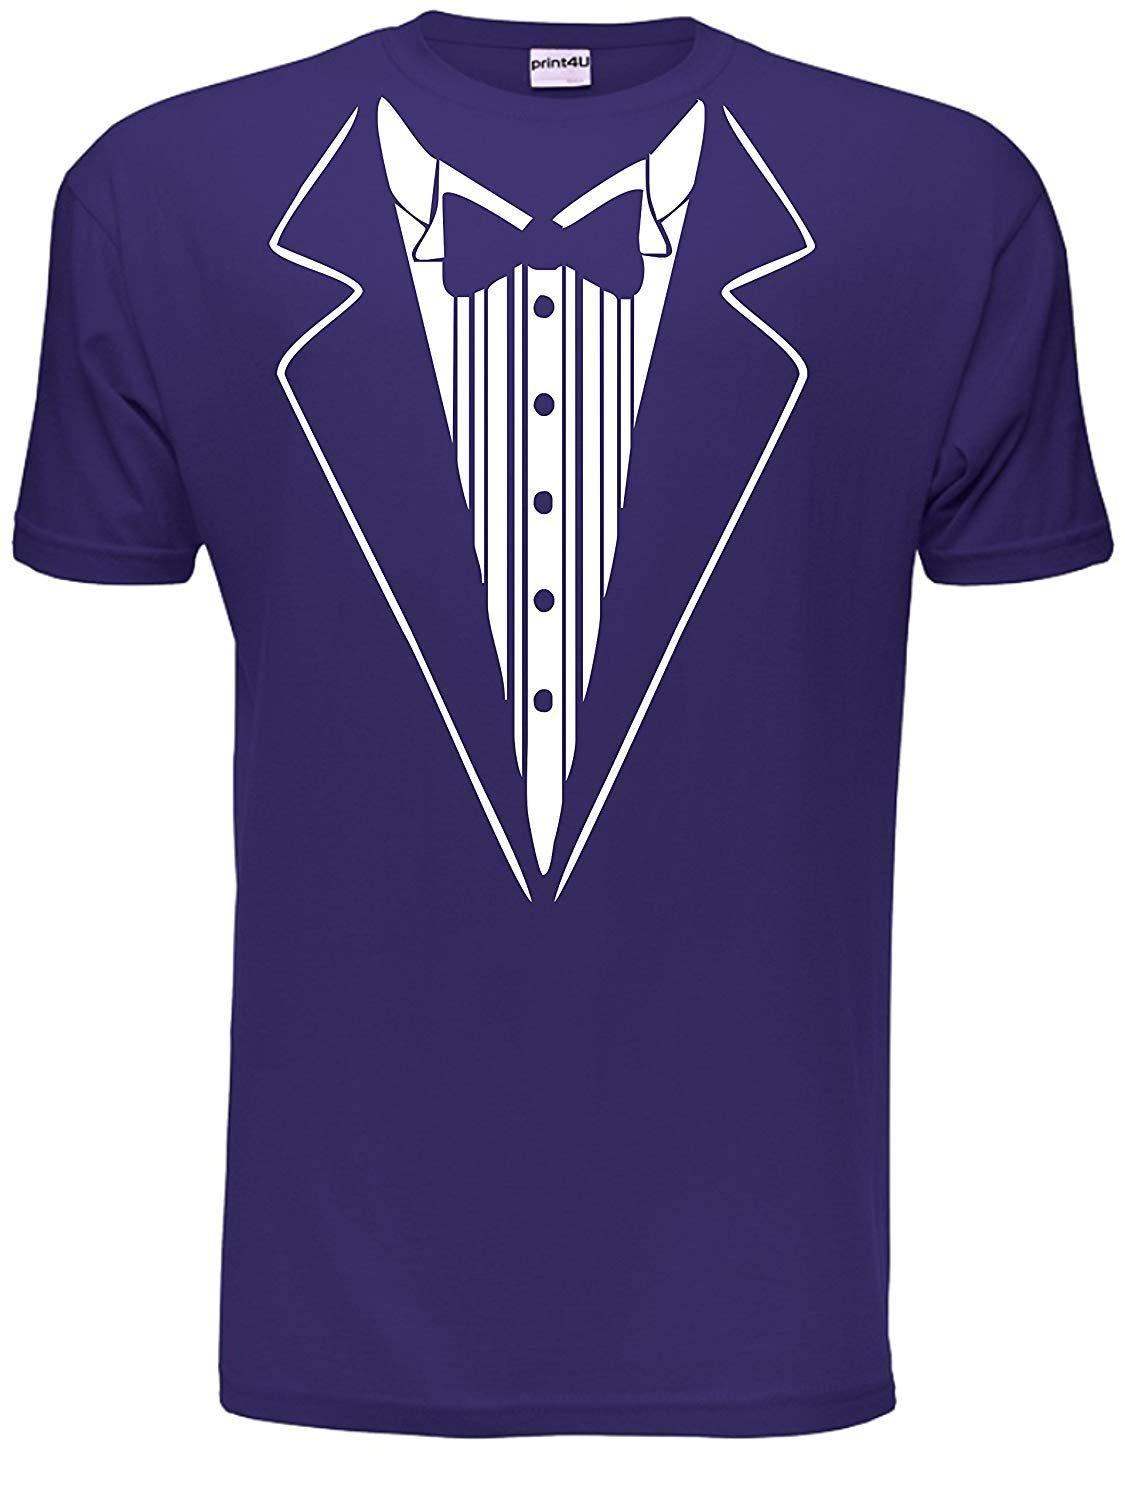 With Blue Zz Logo - Tuxedo Fancy Dress Funny Novelty Joke Bow Tie Mens T-Shirt Size S ...